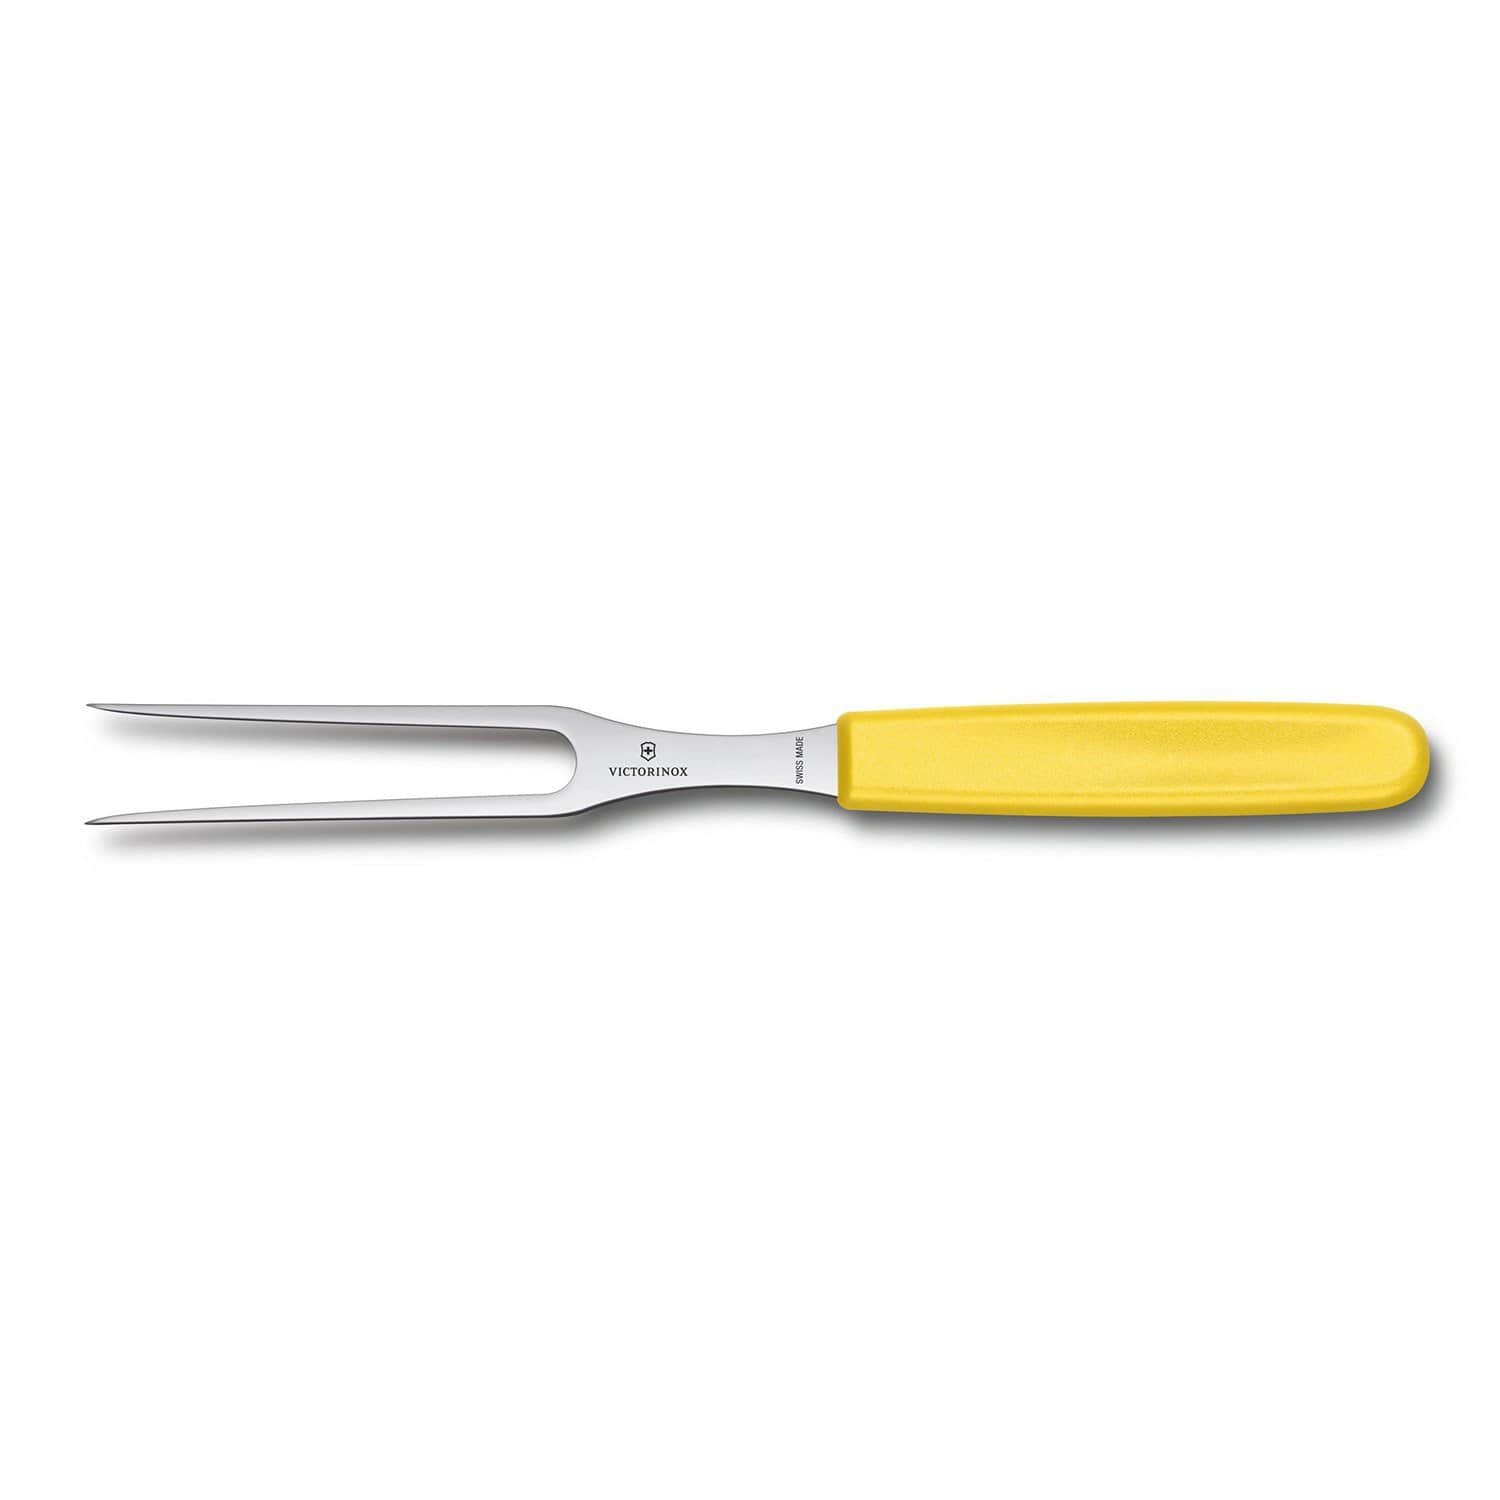 Victorinox Swiss Classic Carving Fork - Yellow Blister - 5.2106.15L8B - Jashanmal Home